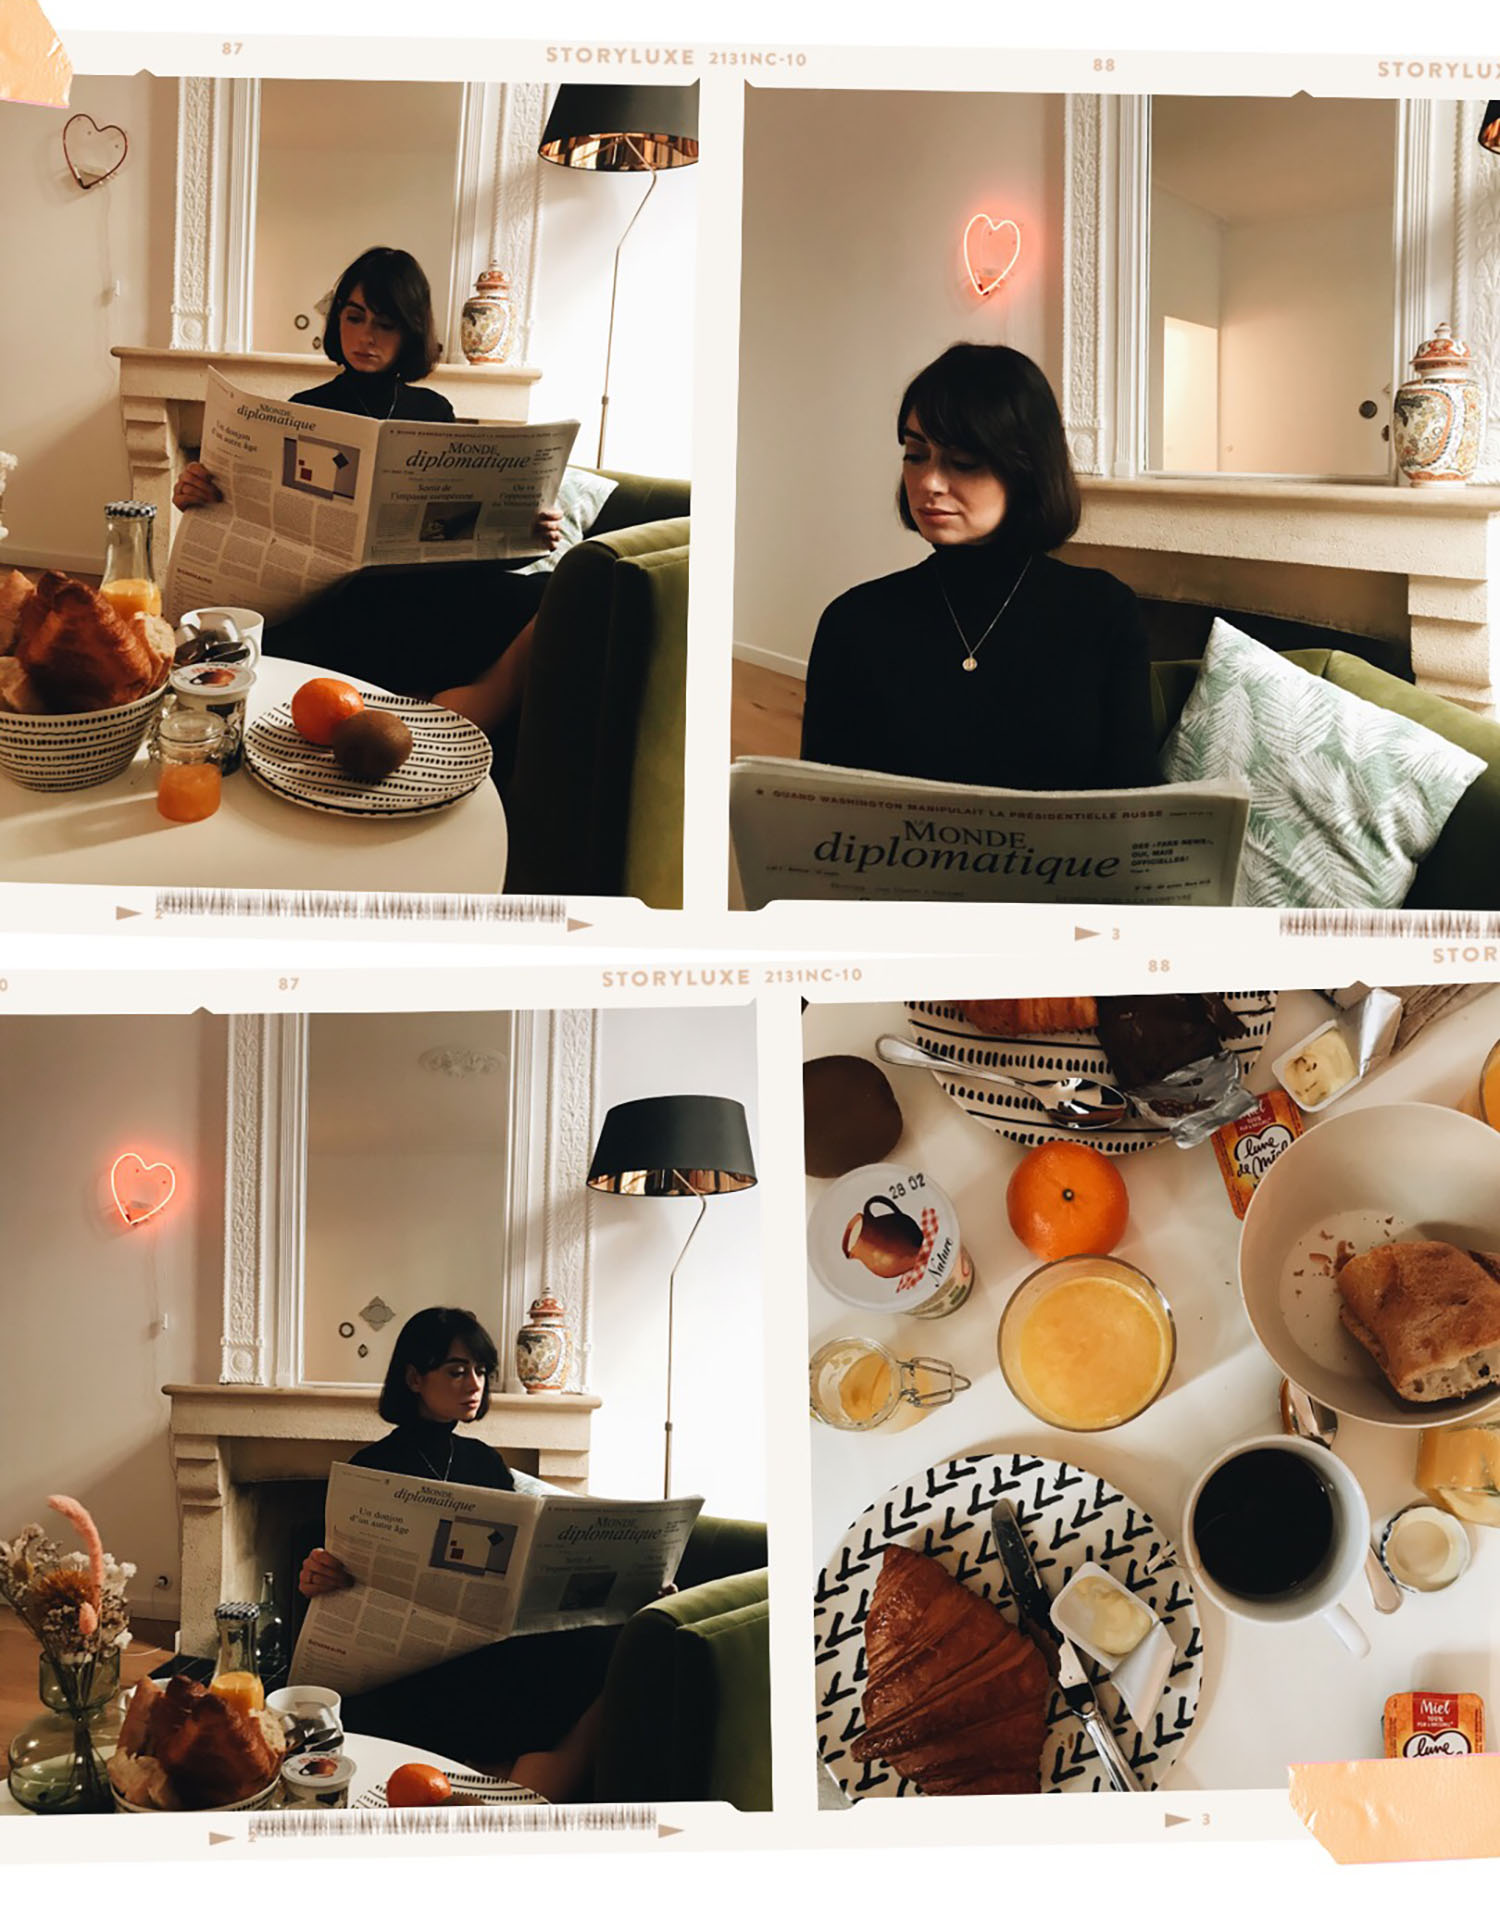 Top Canadian fashion blogger Cee Fardoe of Coco & Vera eats breakfast at La Maison Fernand in Bordeaux, France